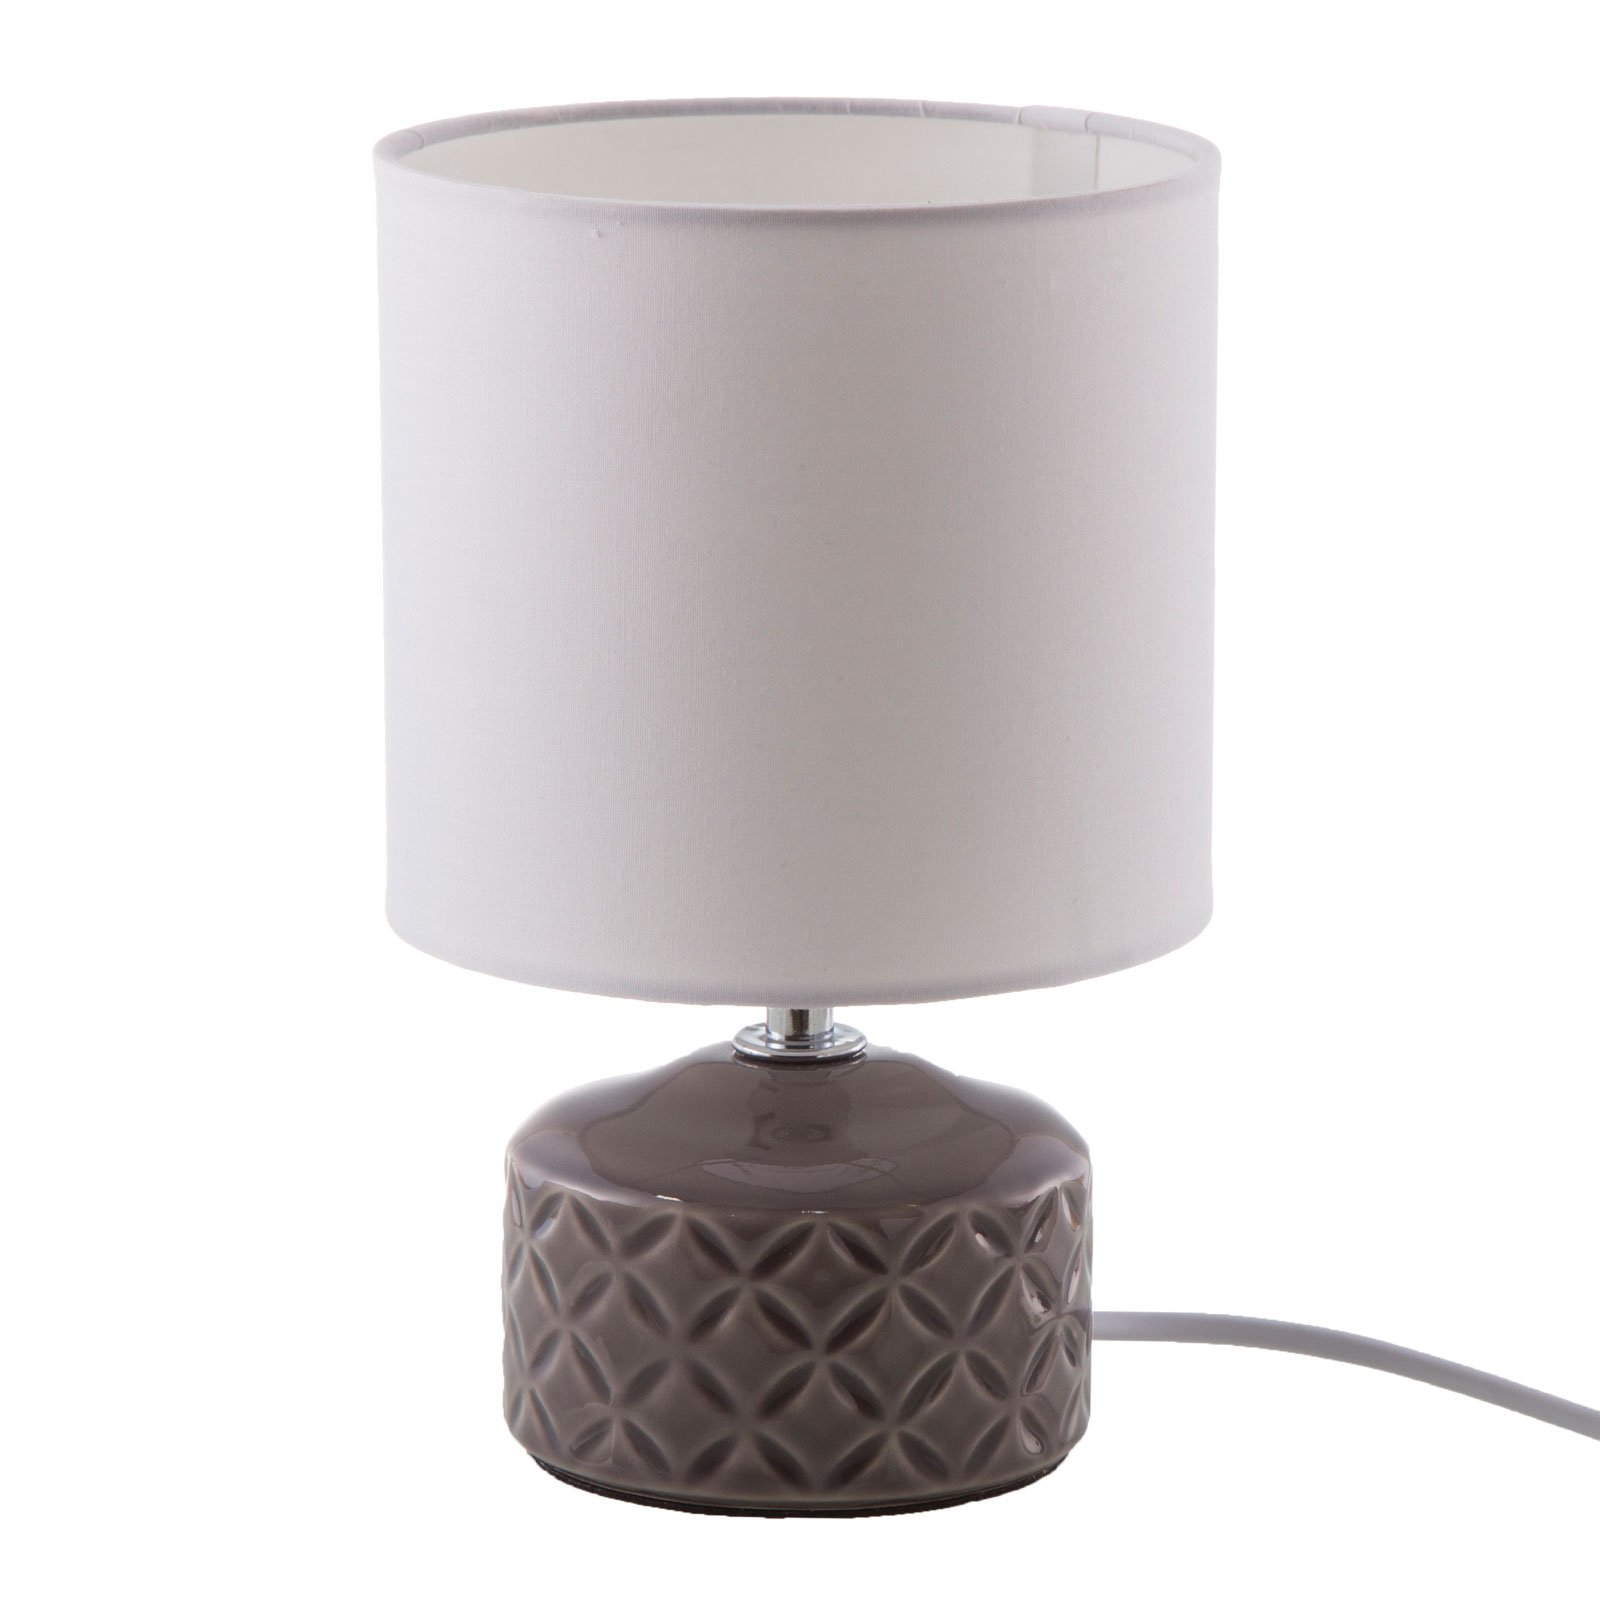 Jon table lamp with ceramic base, grey